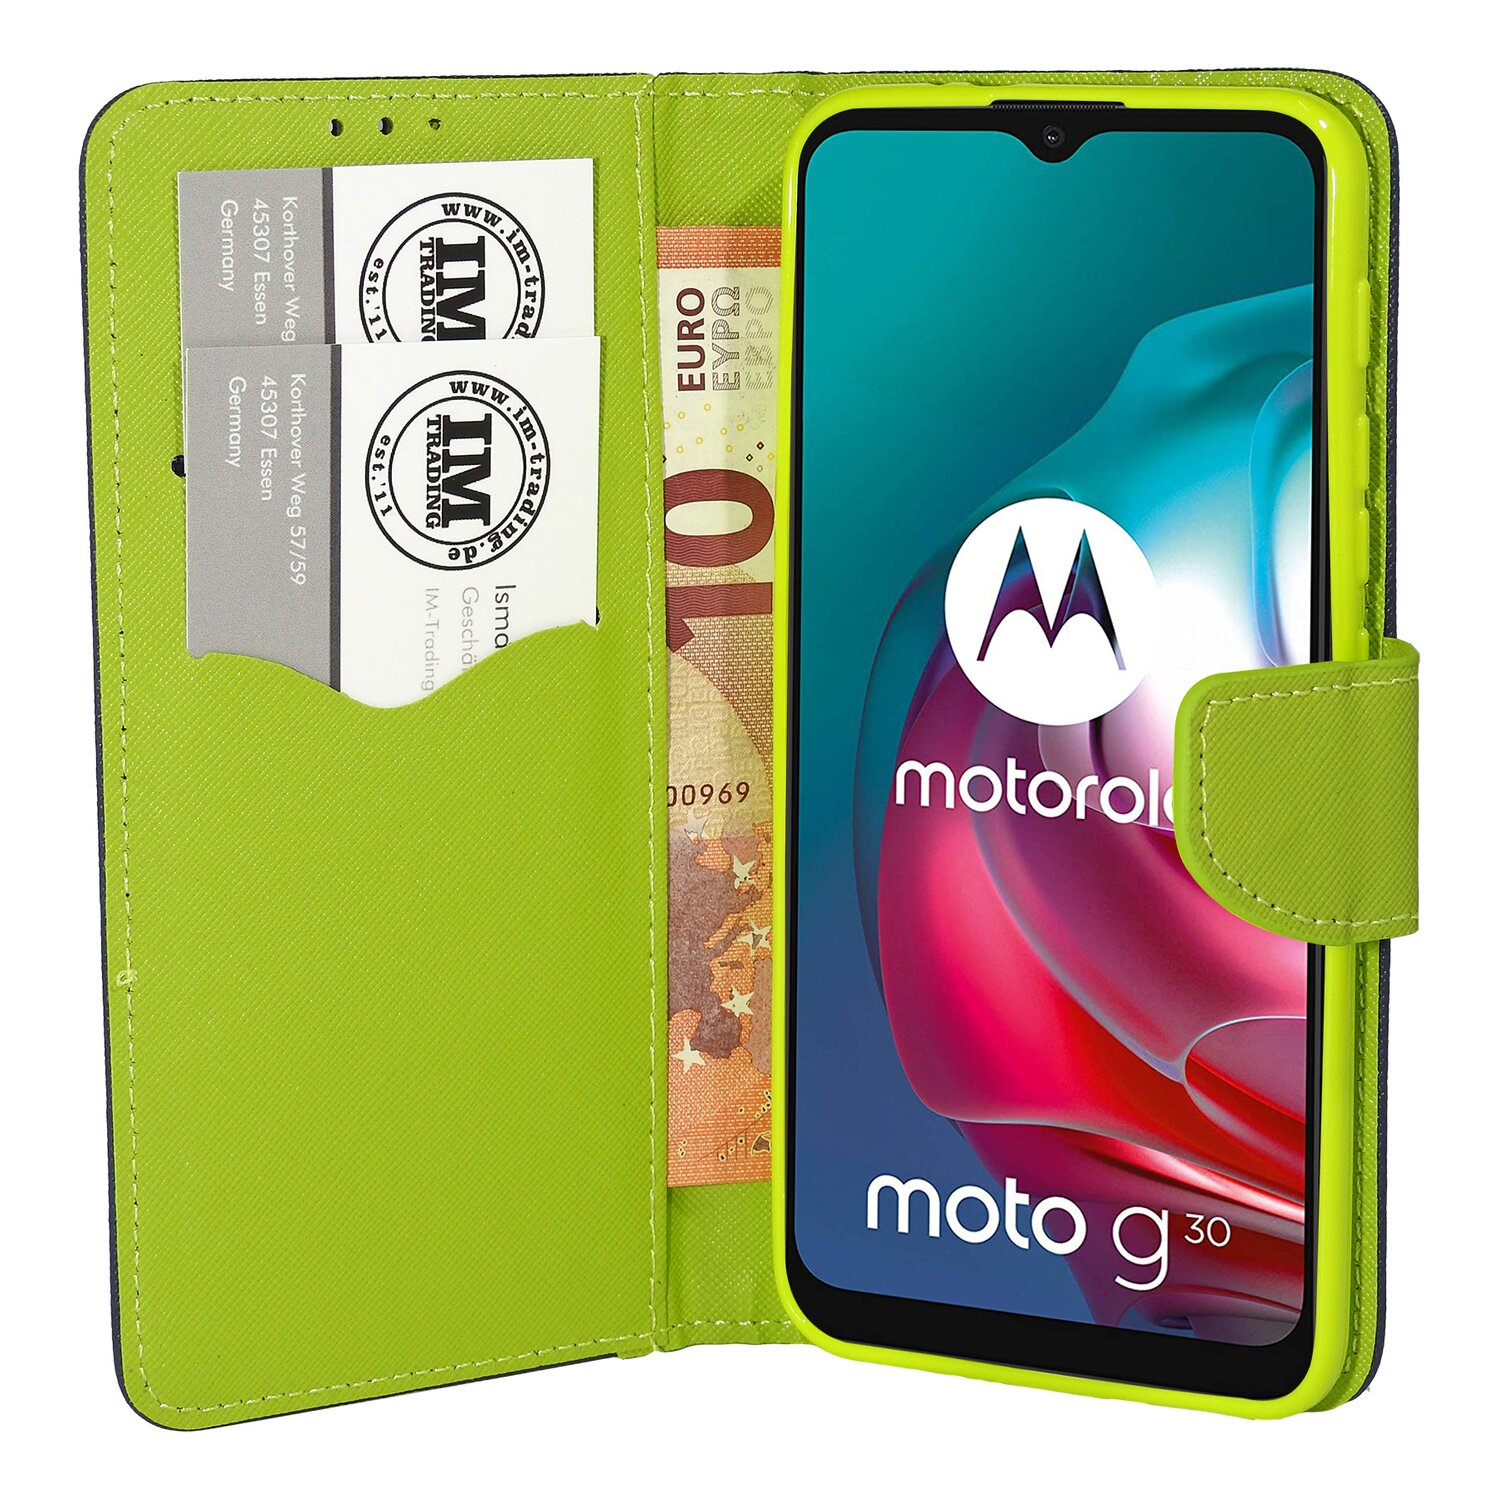 COFI Buch Tasche, Motorola, Blau-Grün MOTO G30, Bookcover